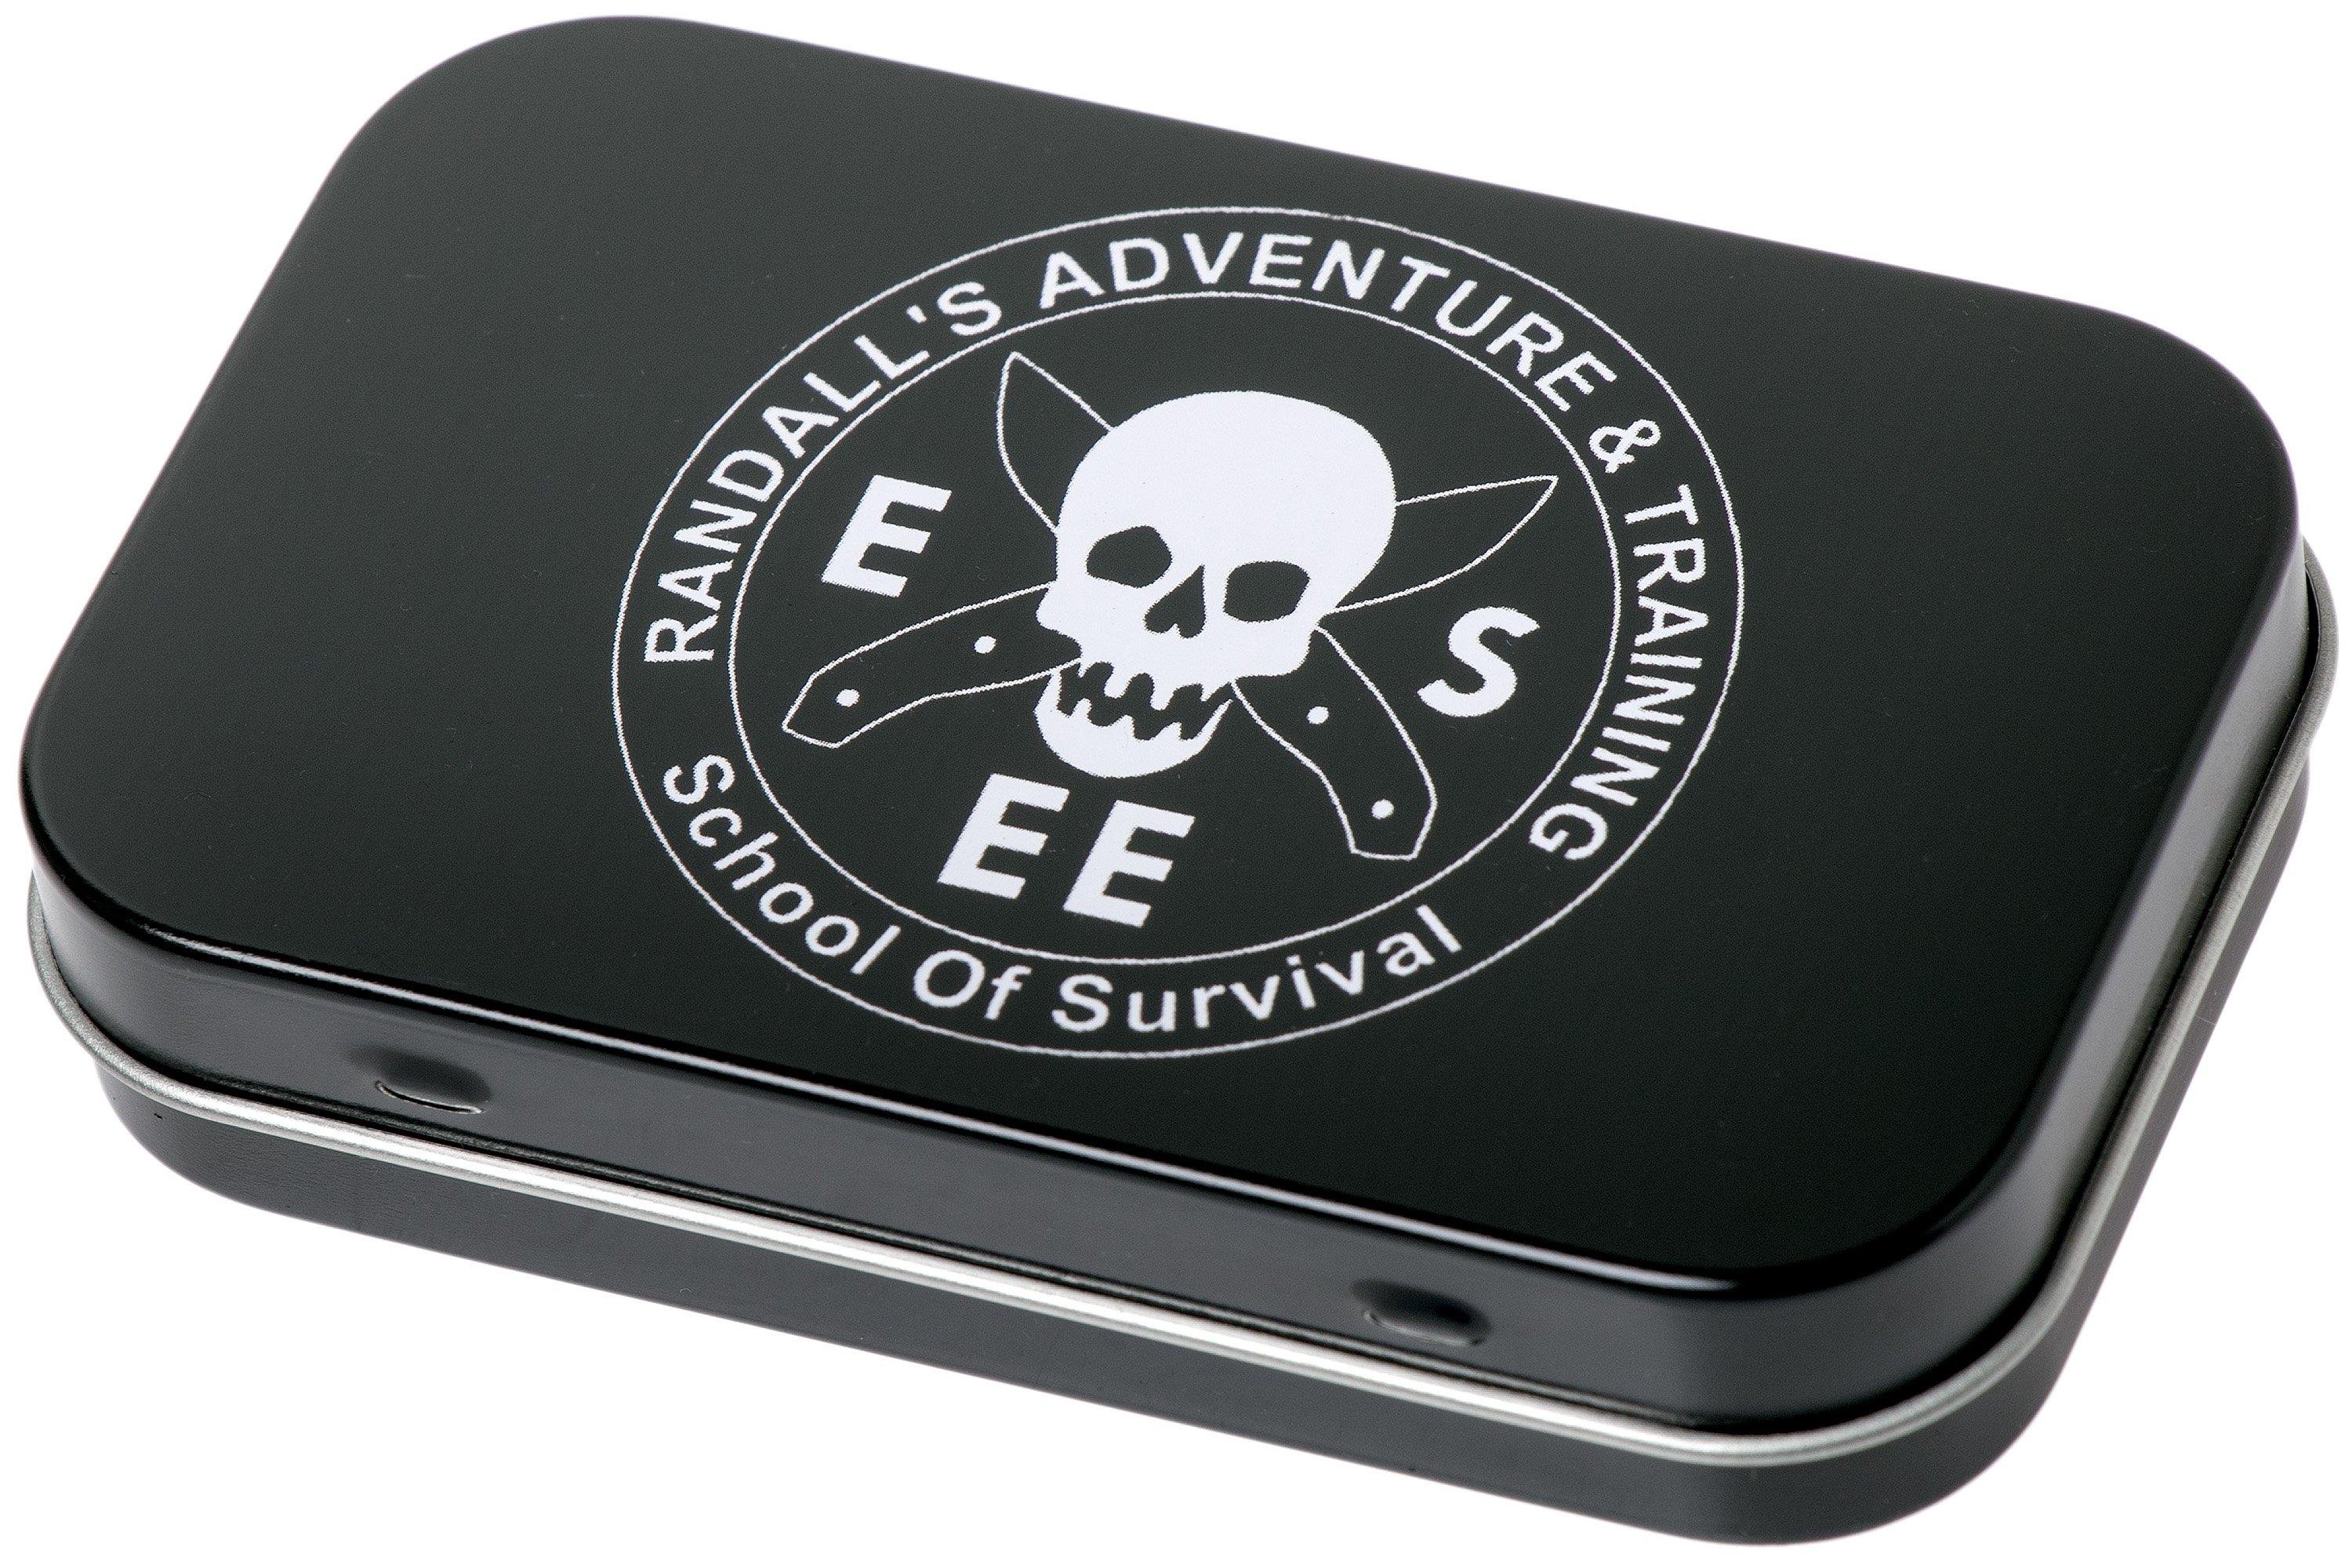 ESEE Mini Survival Kit in Tin